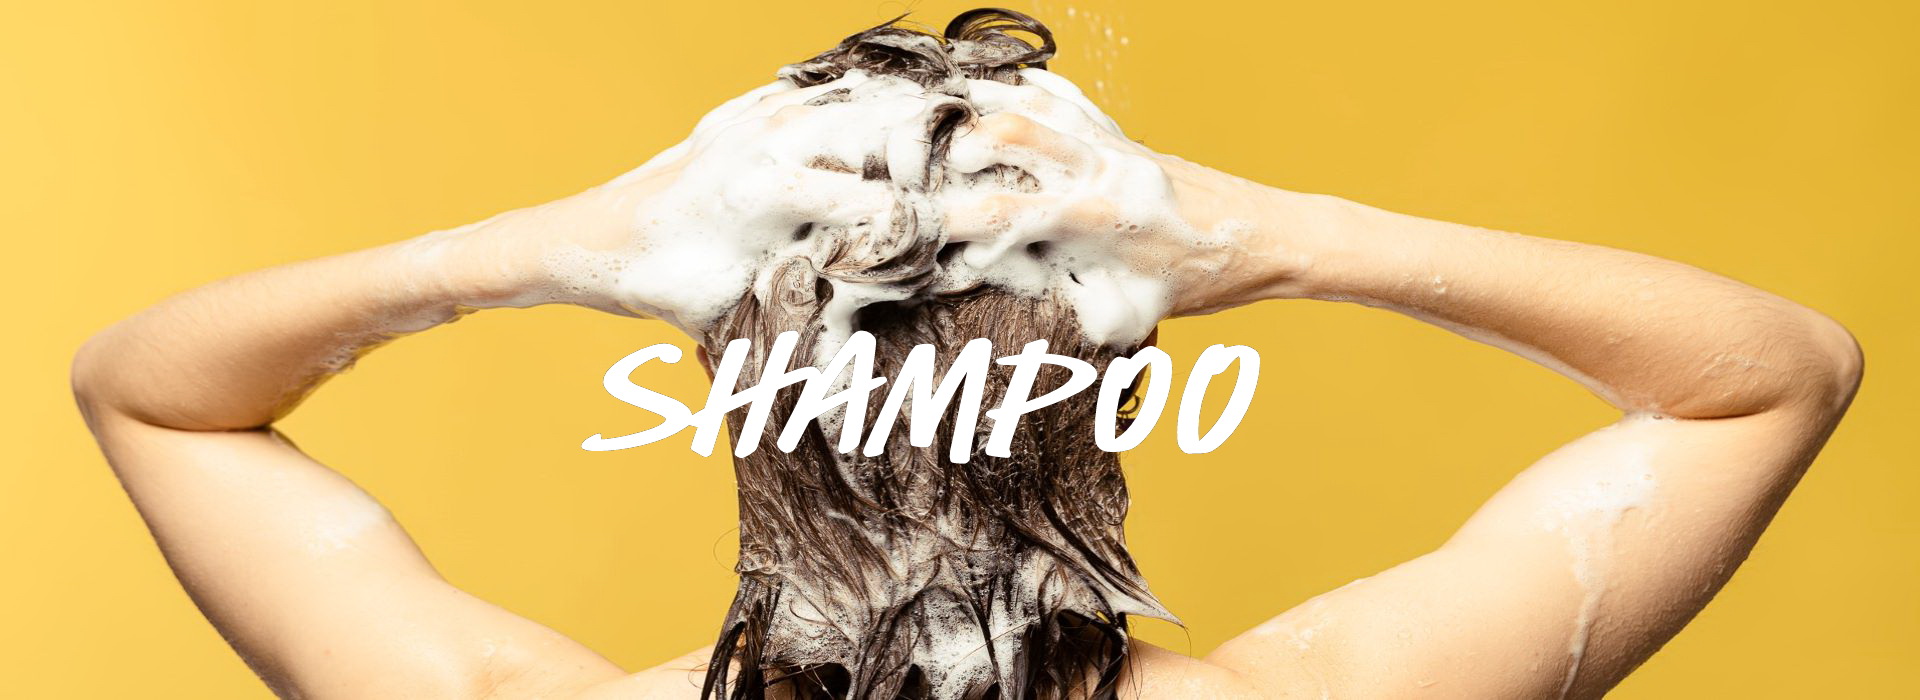 Shampoo Bars and Liquid